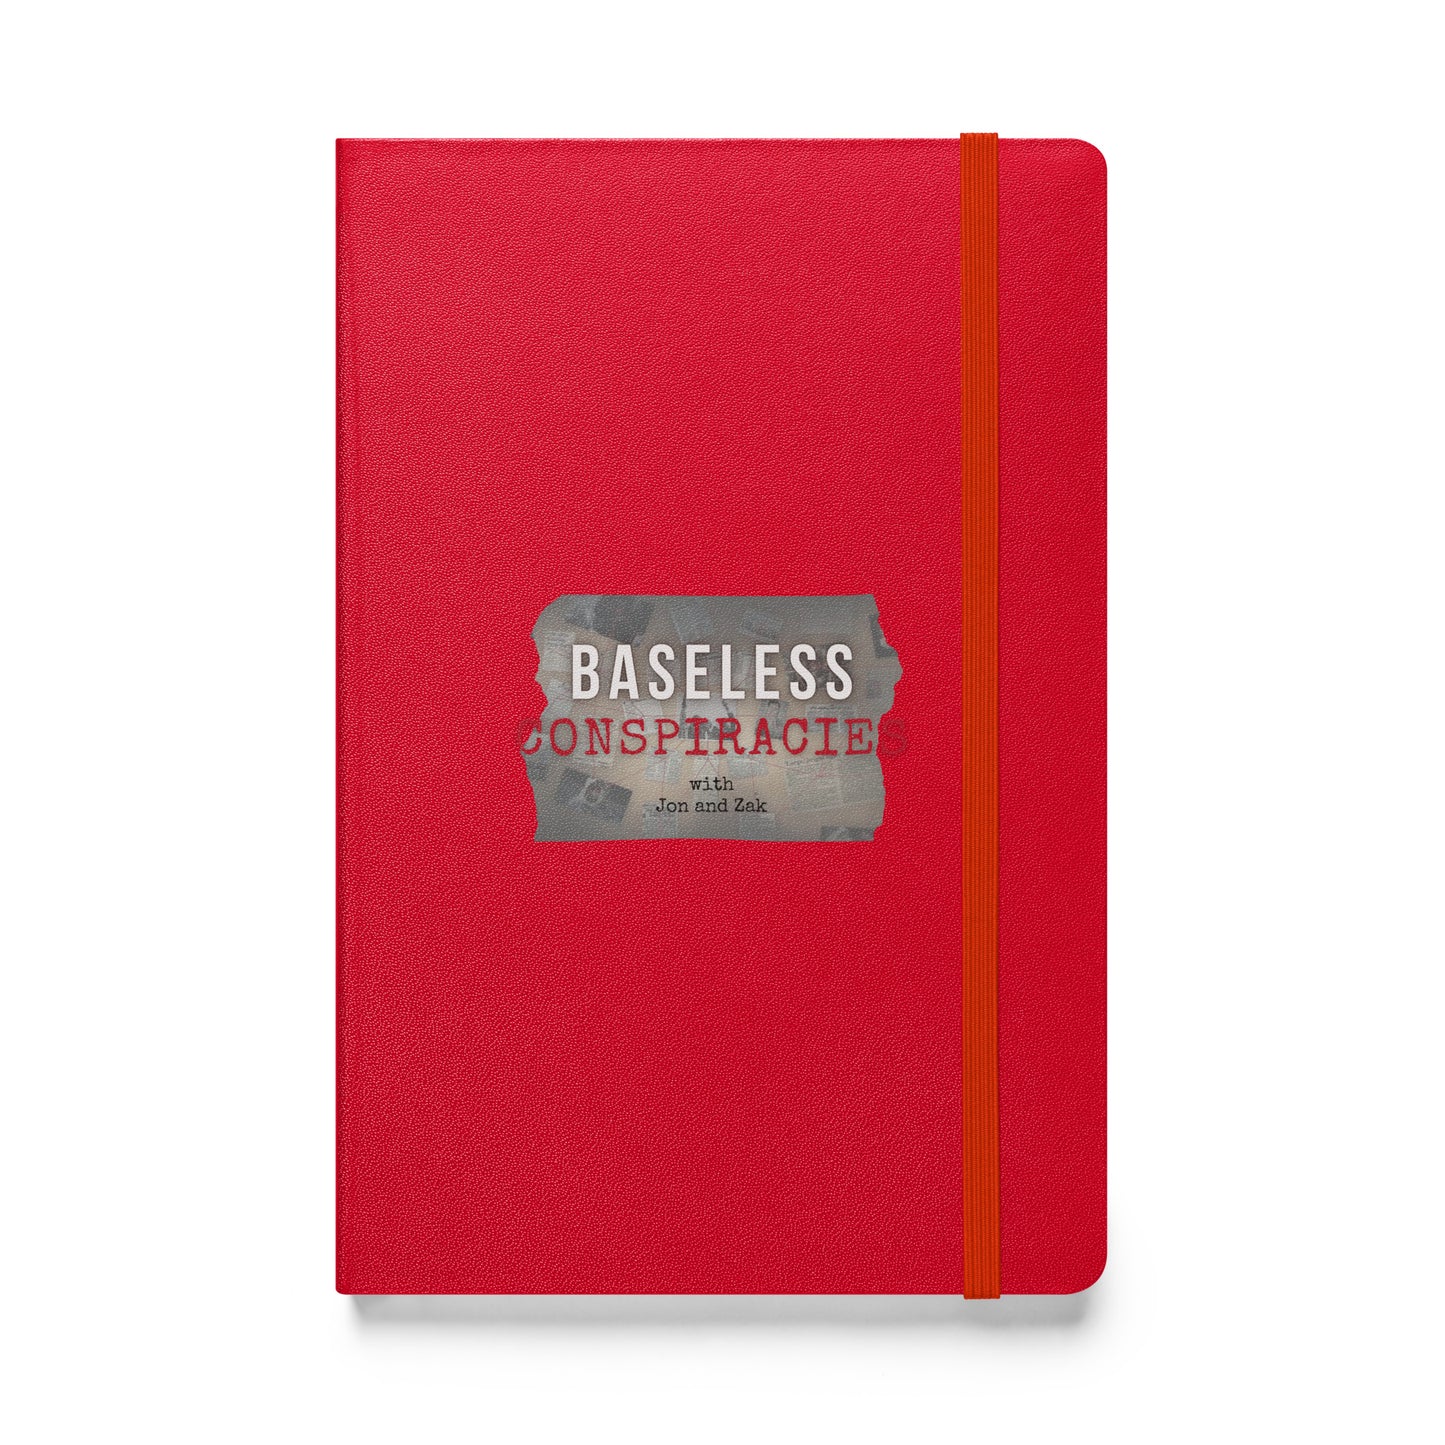 Baseless Conspiracies Hardcover bound notebook